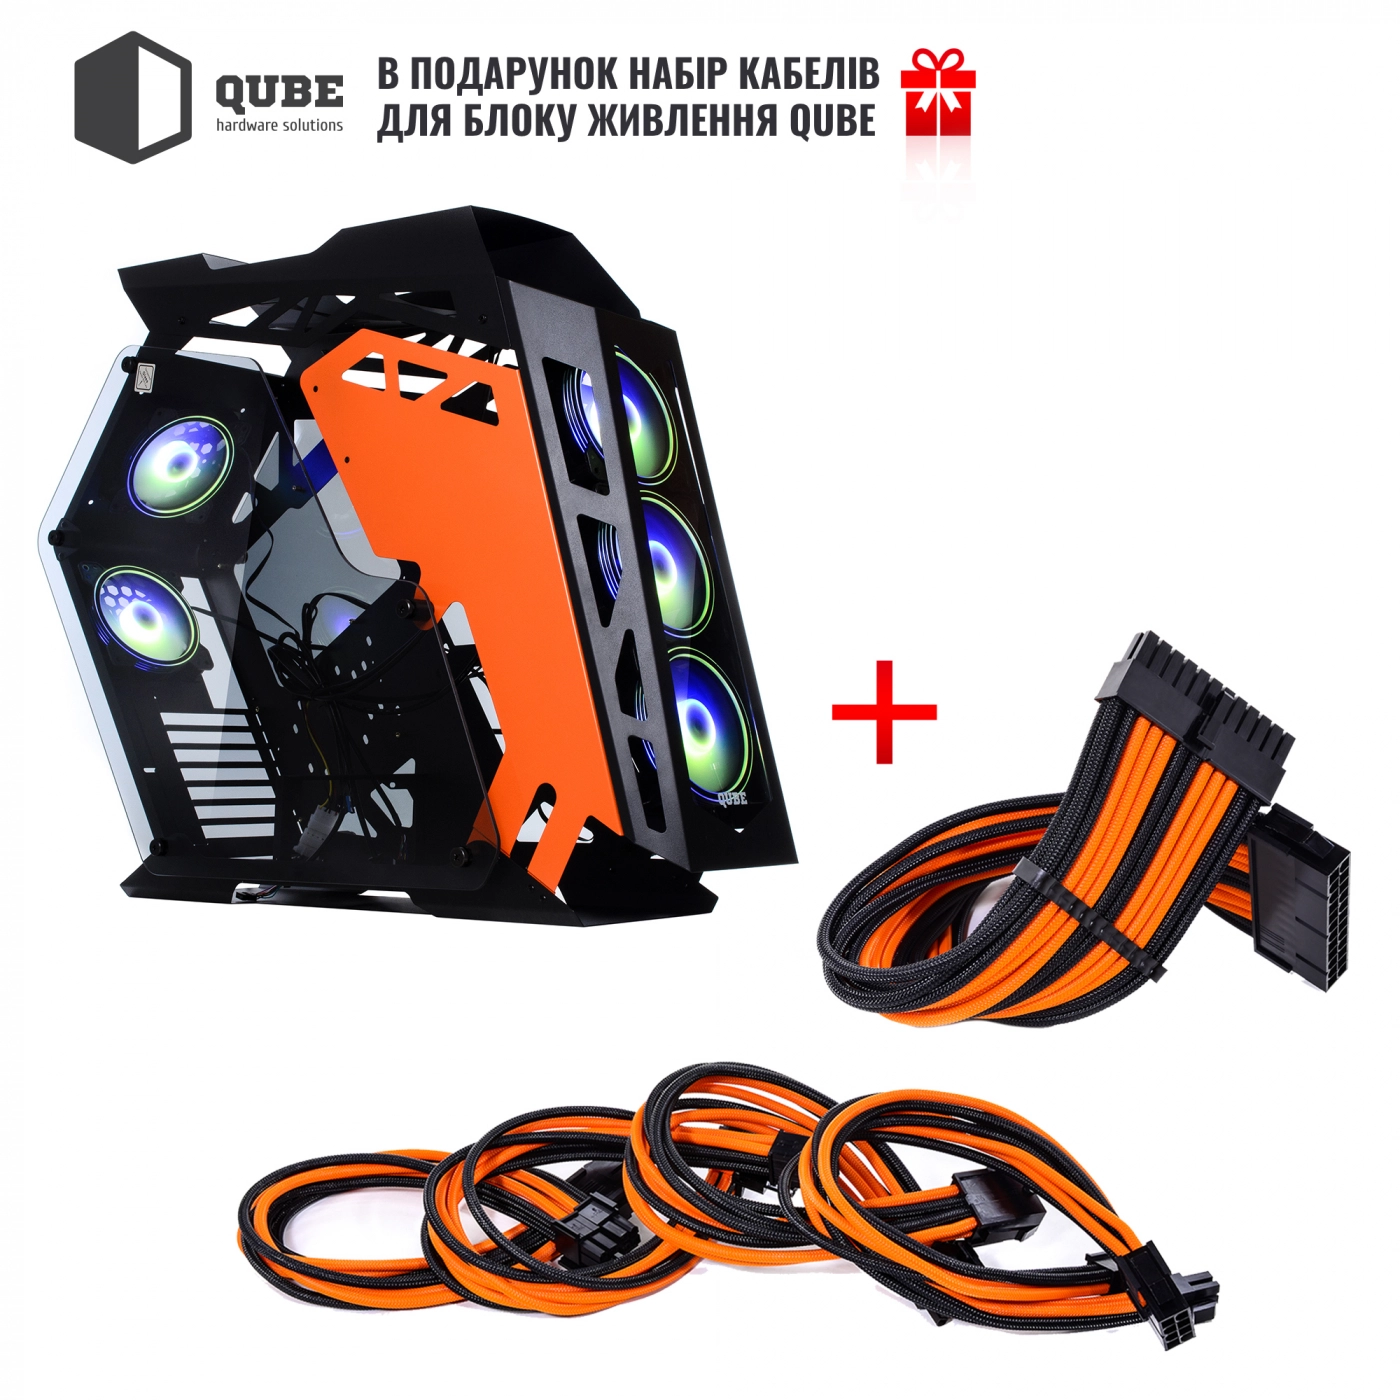 Купить Корпус QUBE STALKER Max Black-Orange (STALKER_FMBE3) + набор кабелей для БП QUBE Black-Orangе (QBWSET24P2x8P2x8PBO) - фото 2